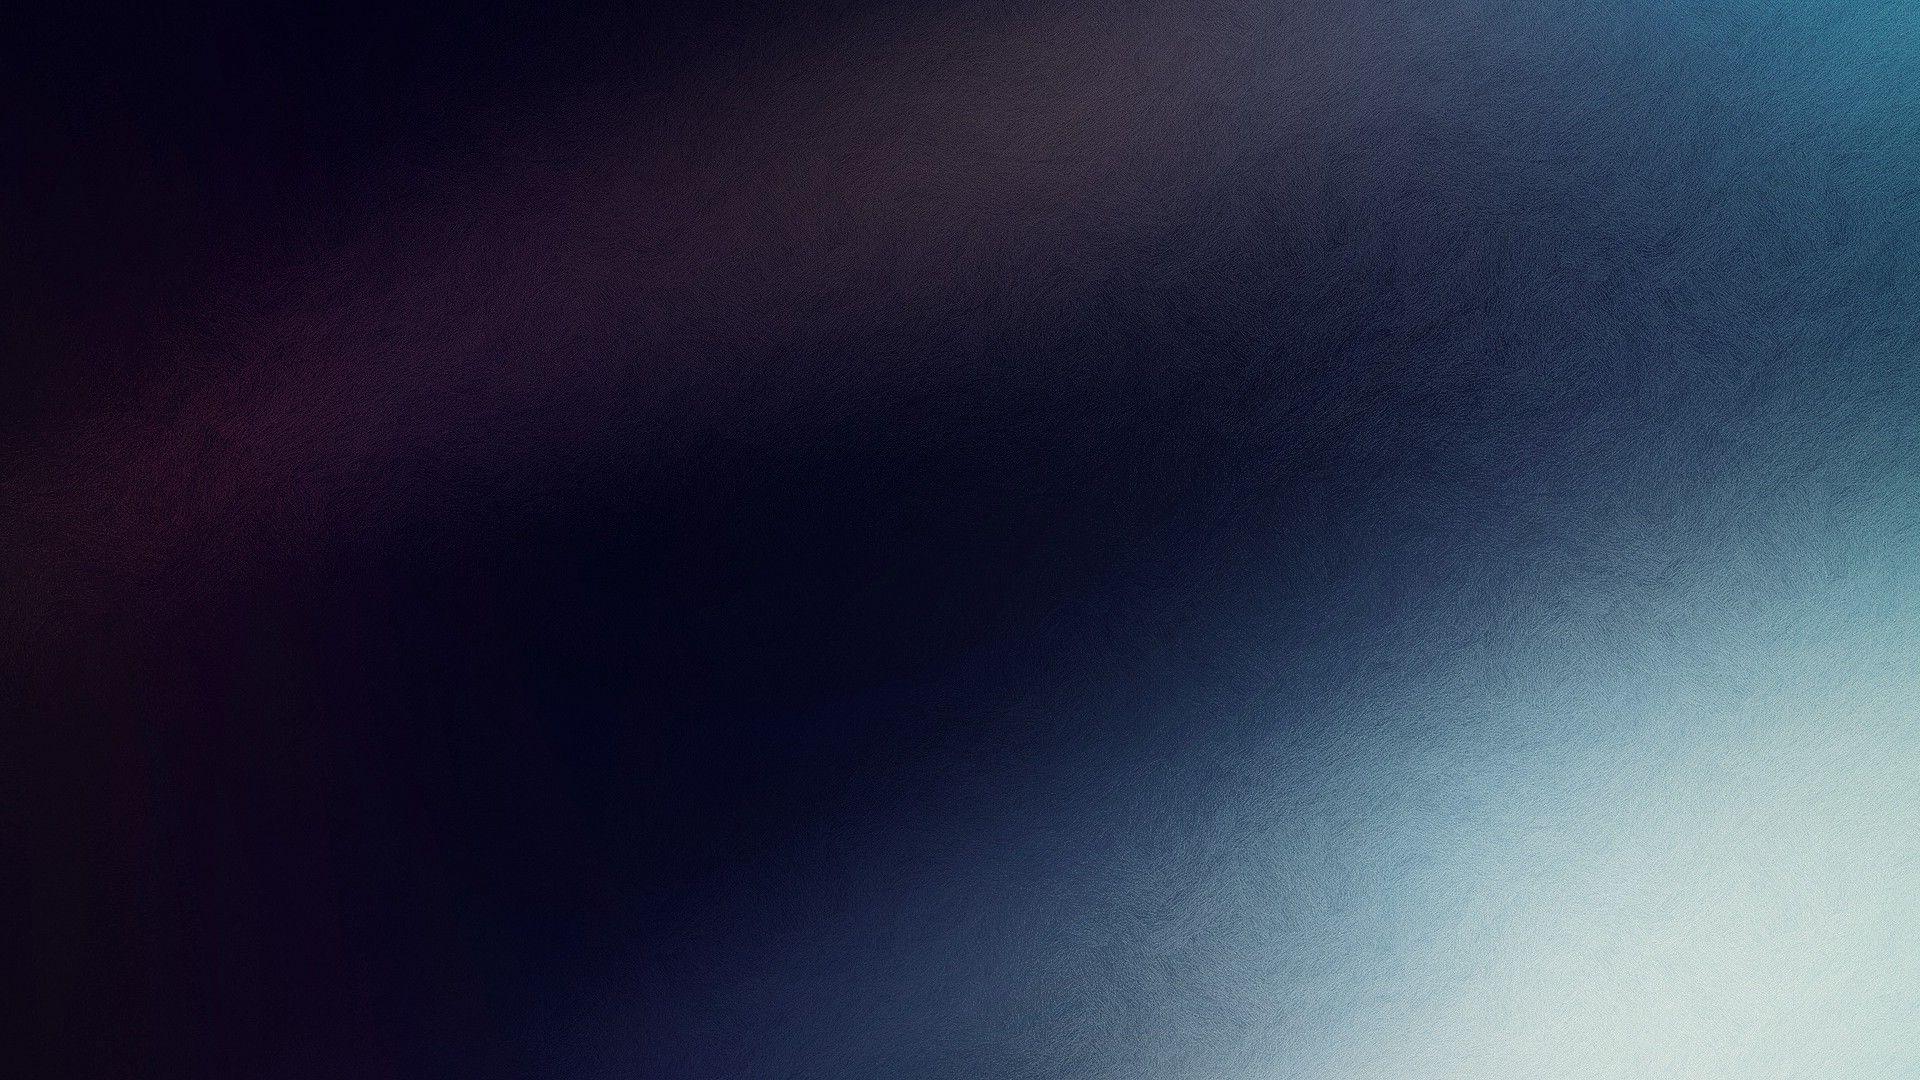 Blue Gradient Textu HD Wallpaper, Background Image